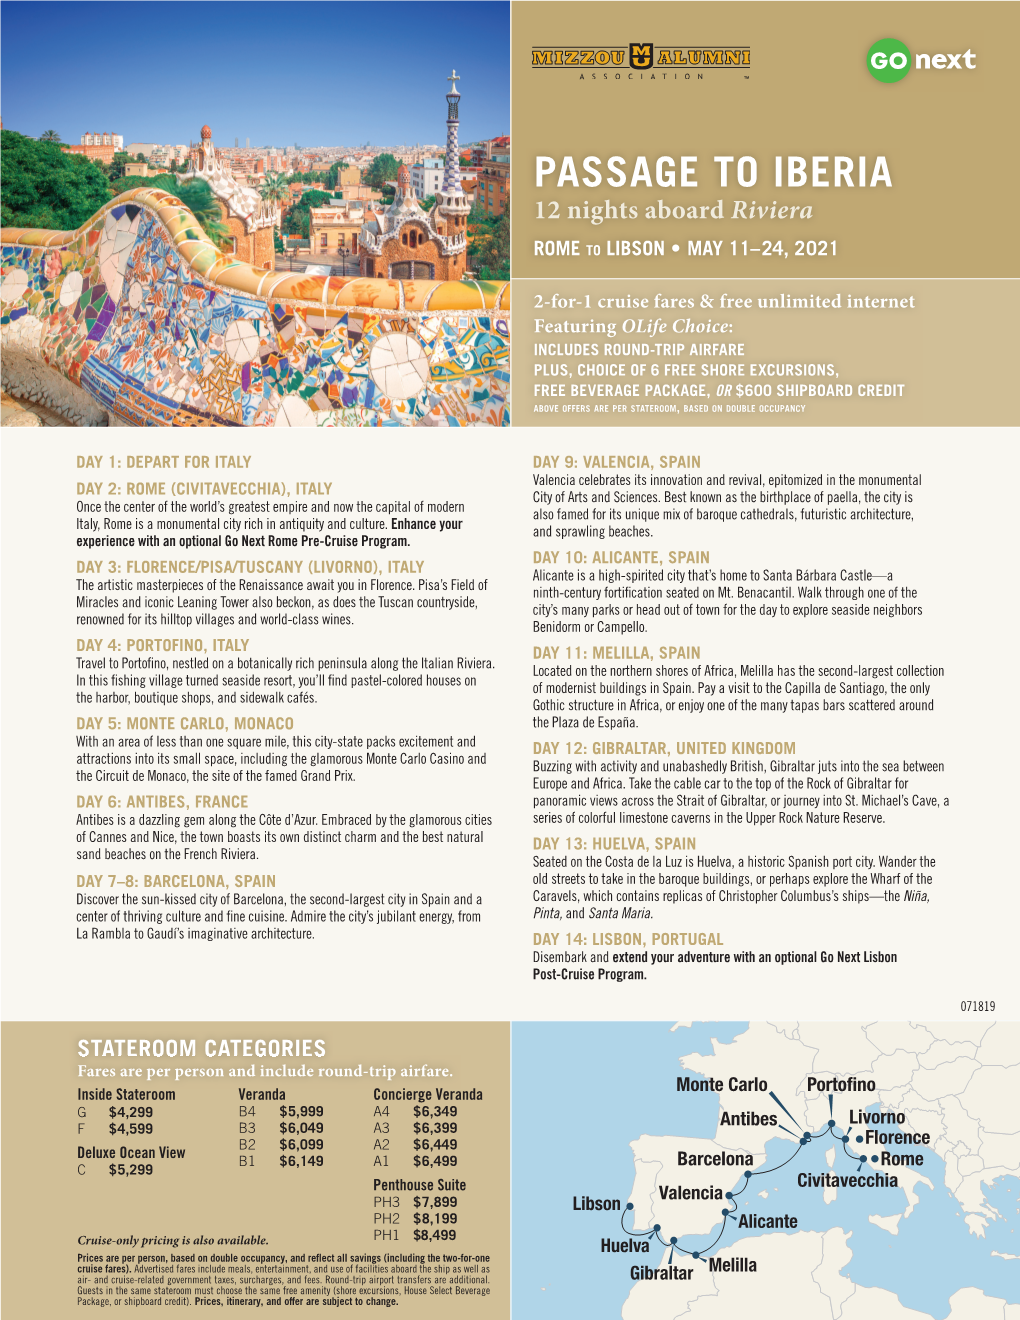 PASSAGE to IBERIA 12 Nights Aboard Riviera